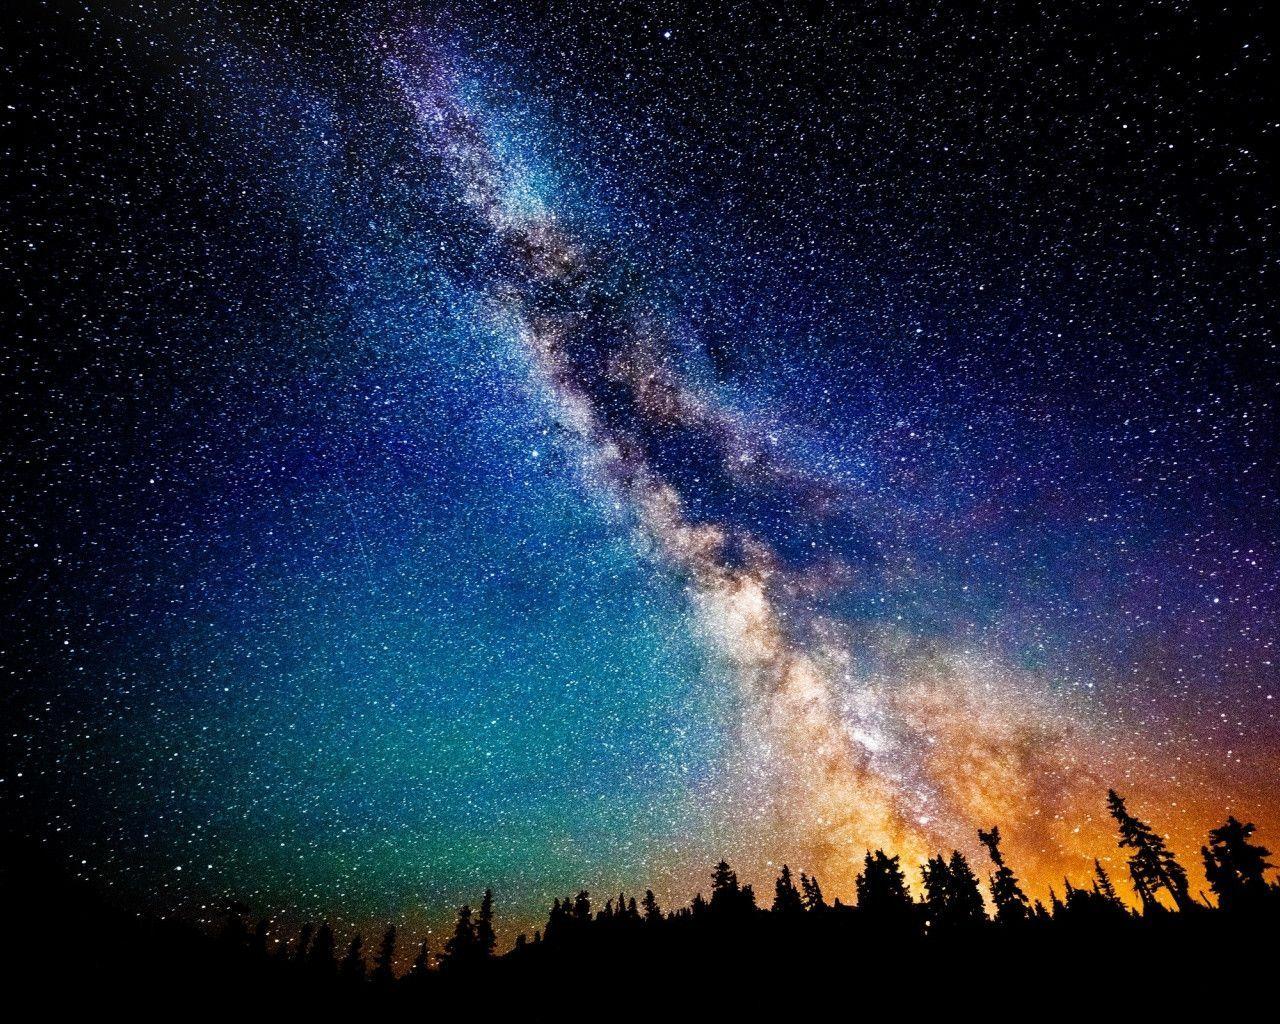 The Milky Way at Night desktop PC and Mac wallpaper